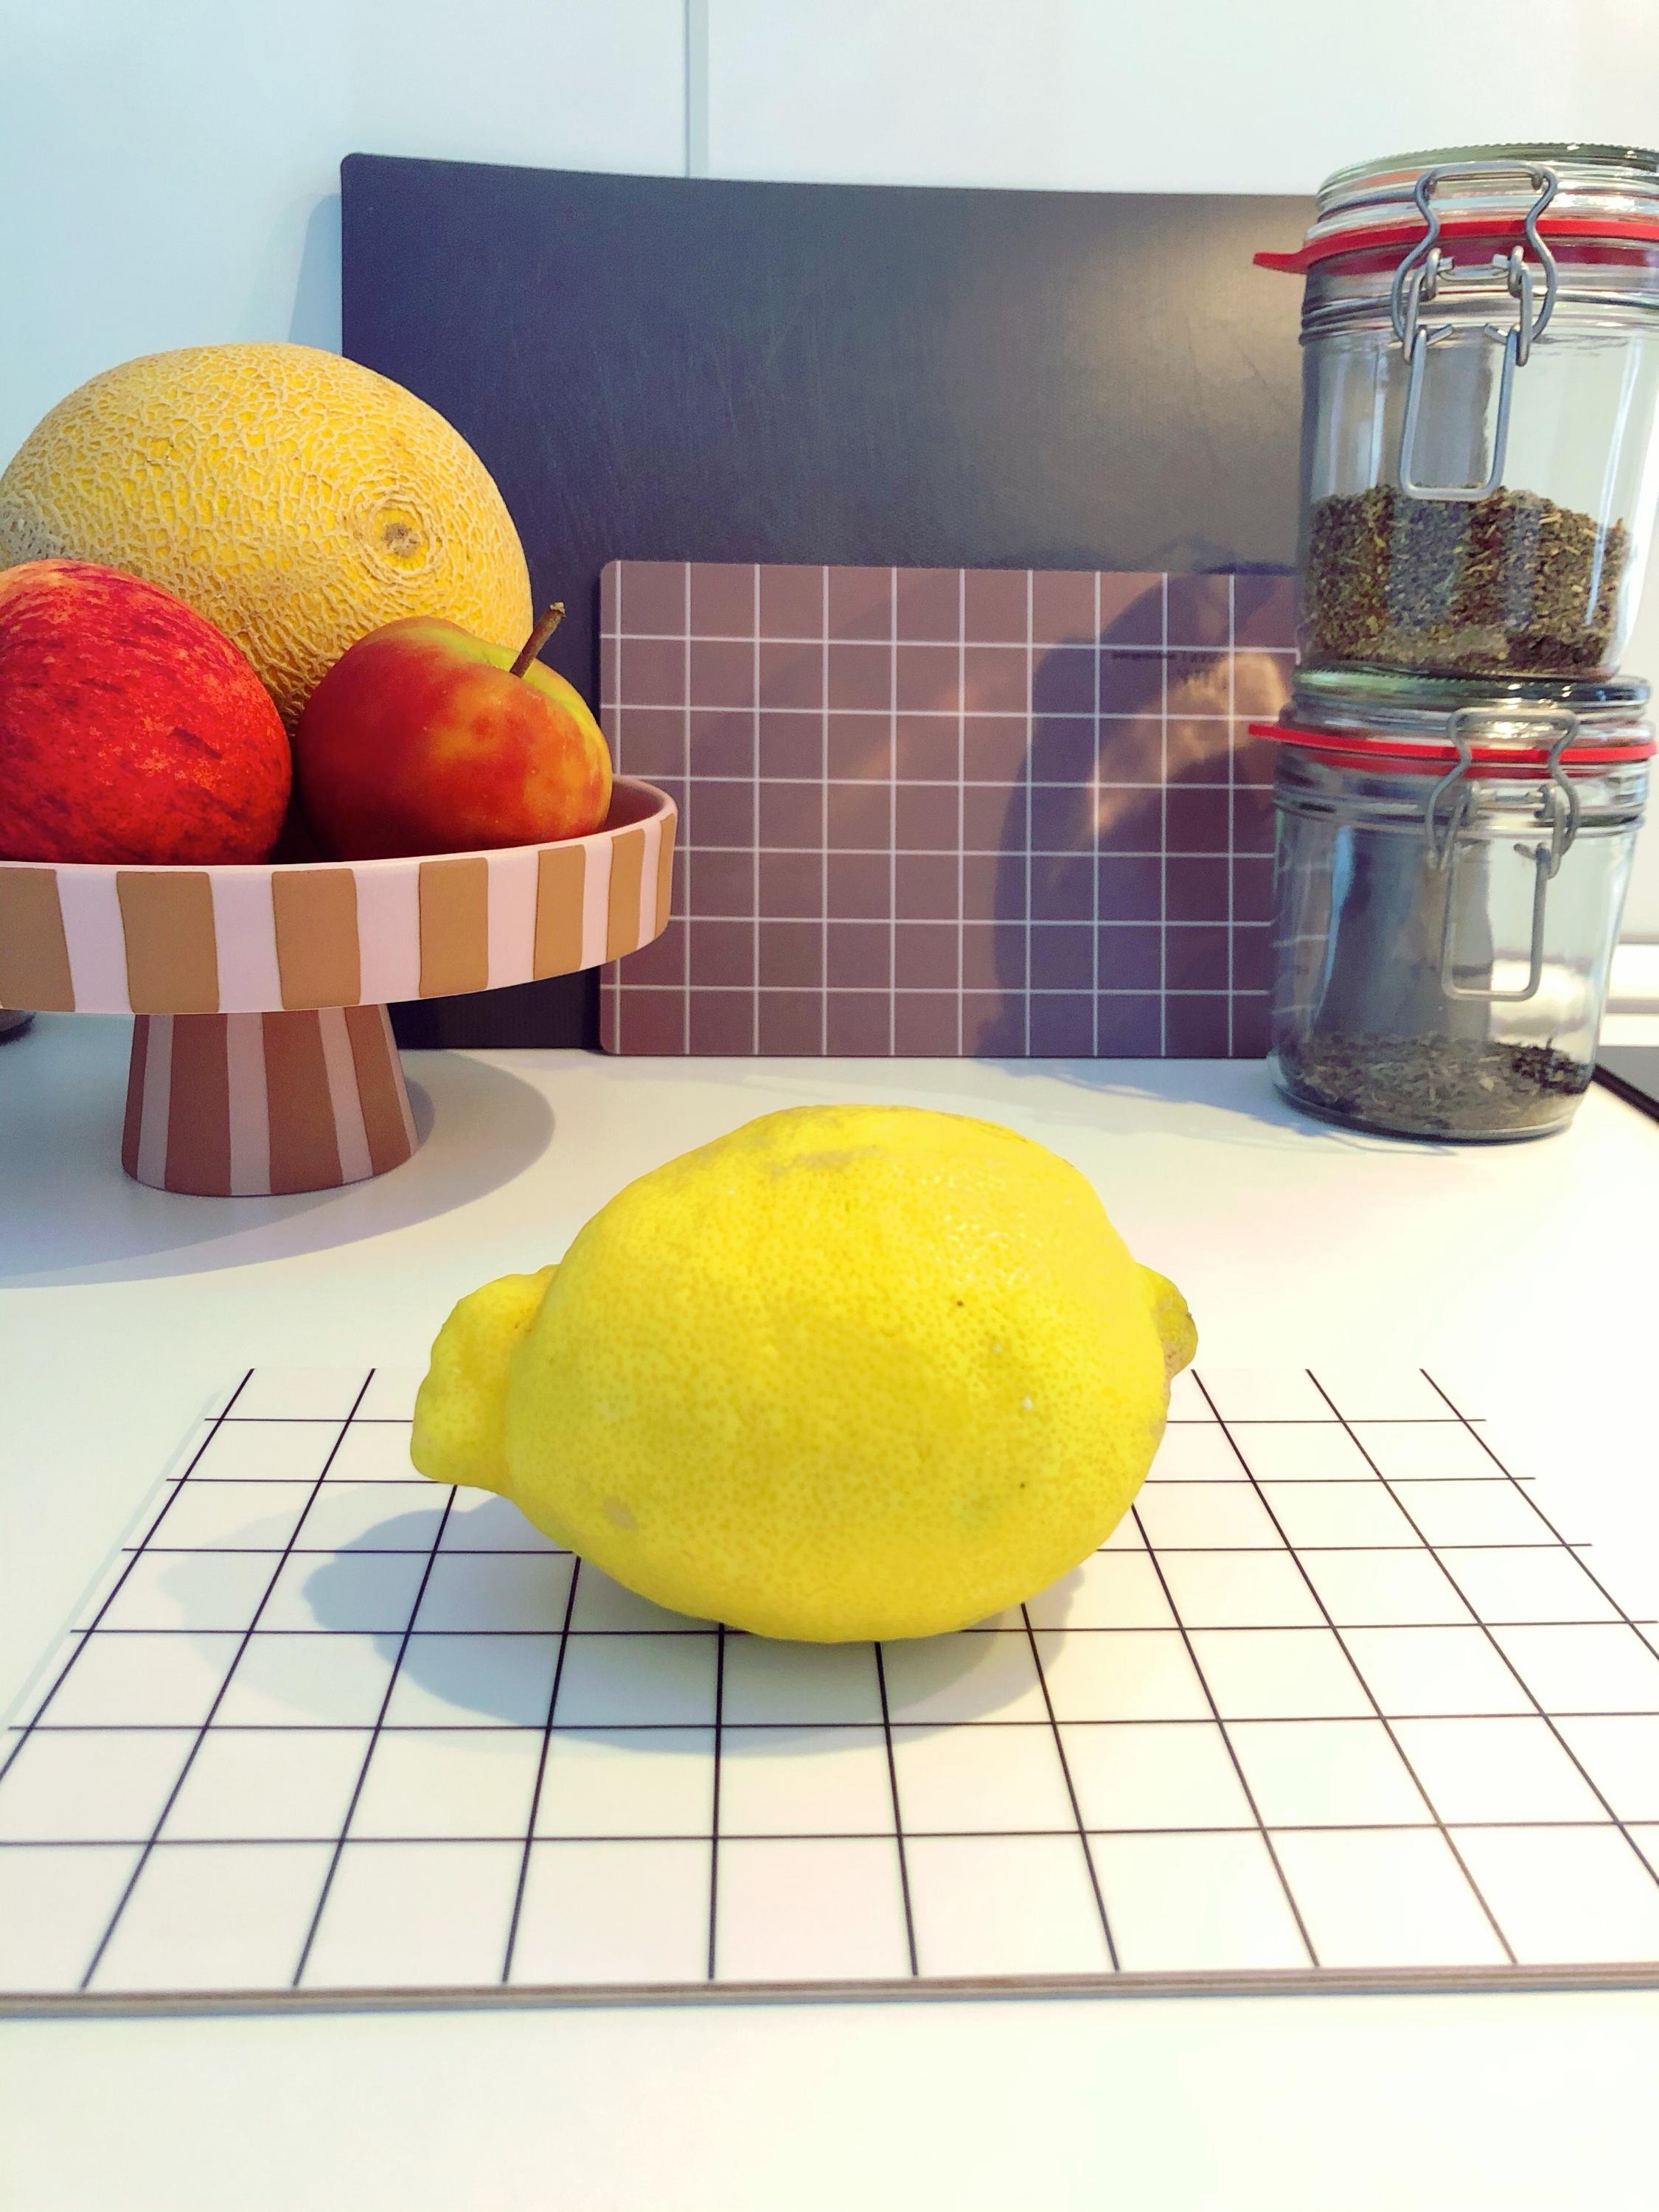 Zitroni Zitroni #küche #kitchen #kücheninspo #couchliebt #zitrone